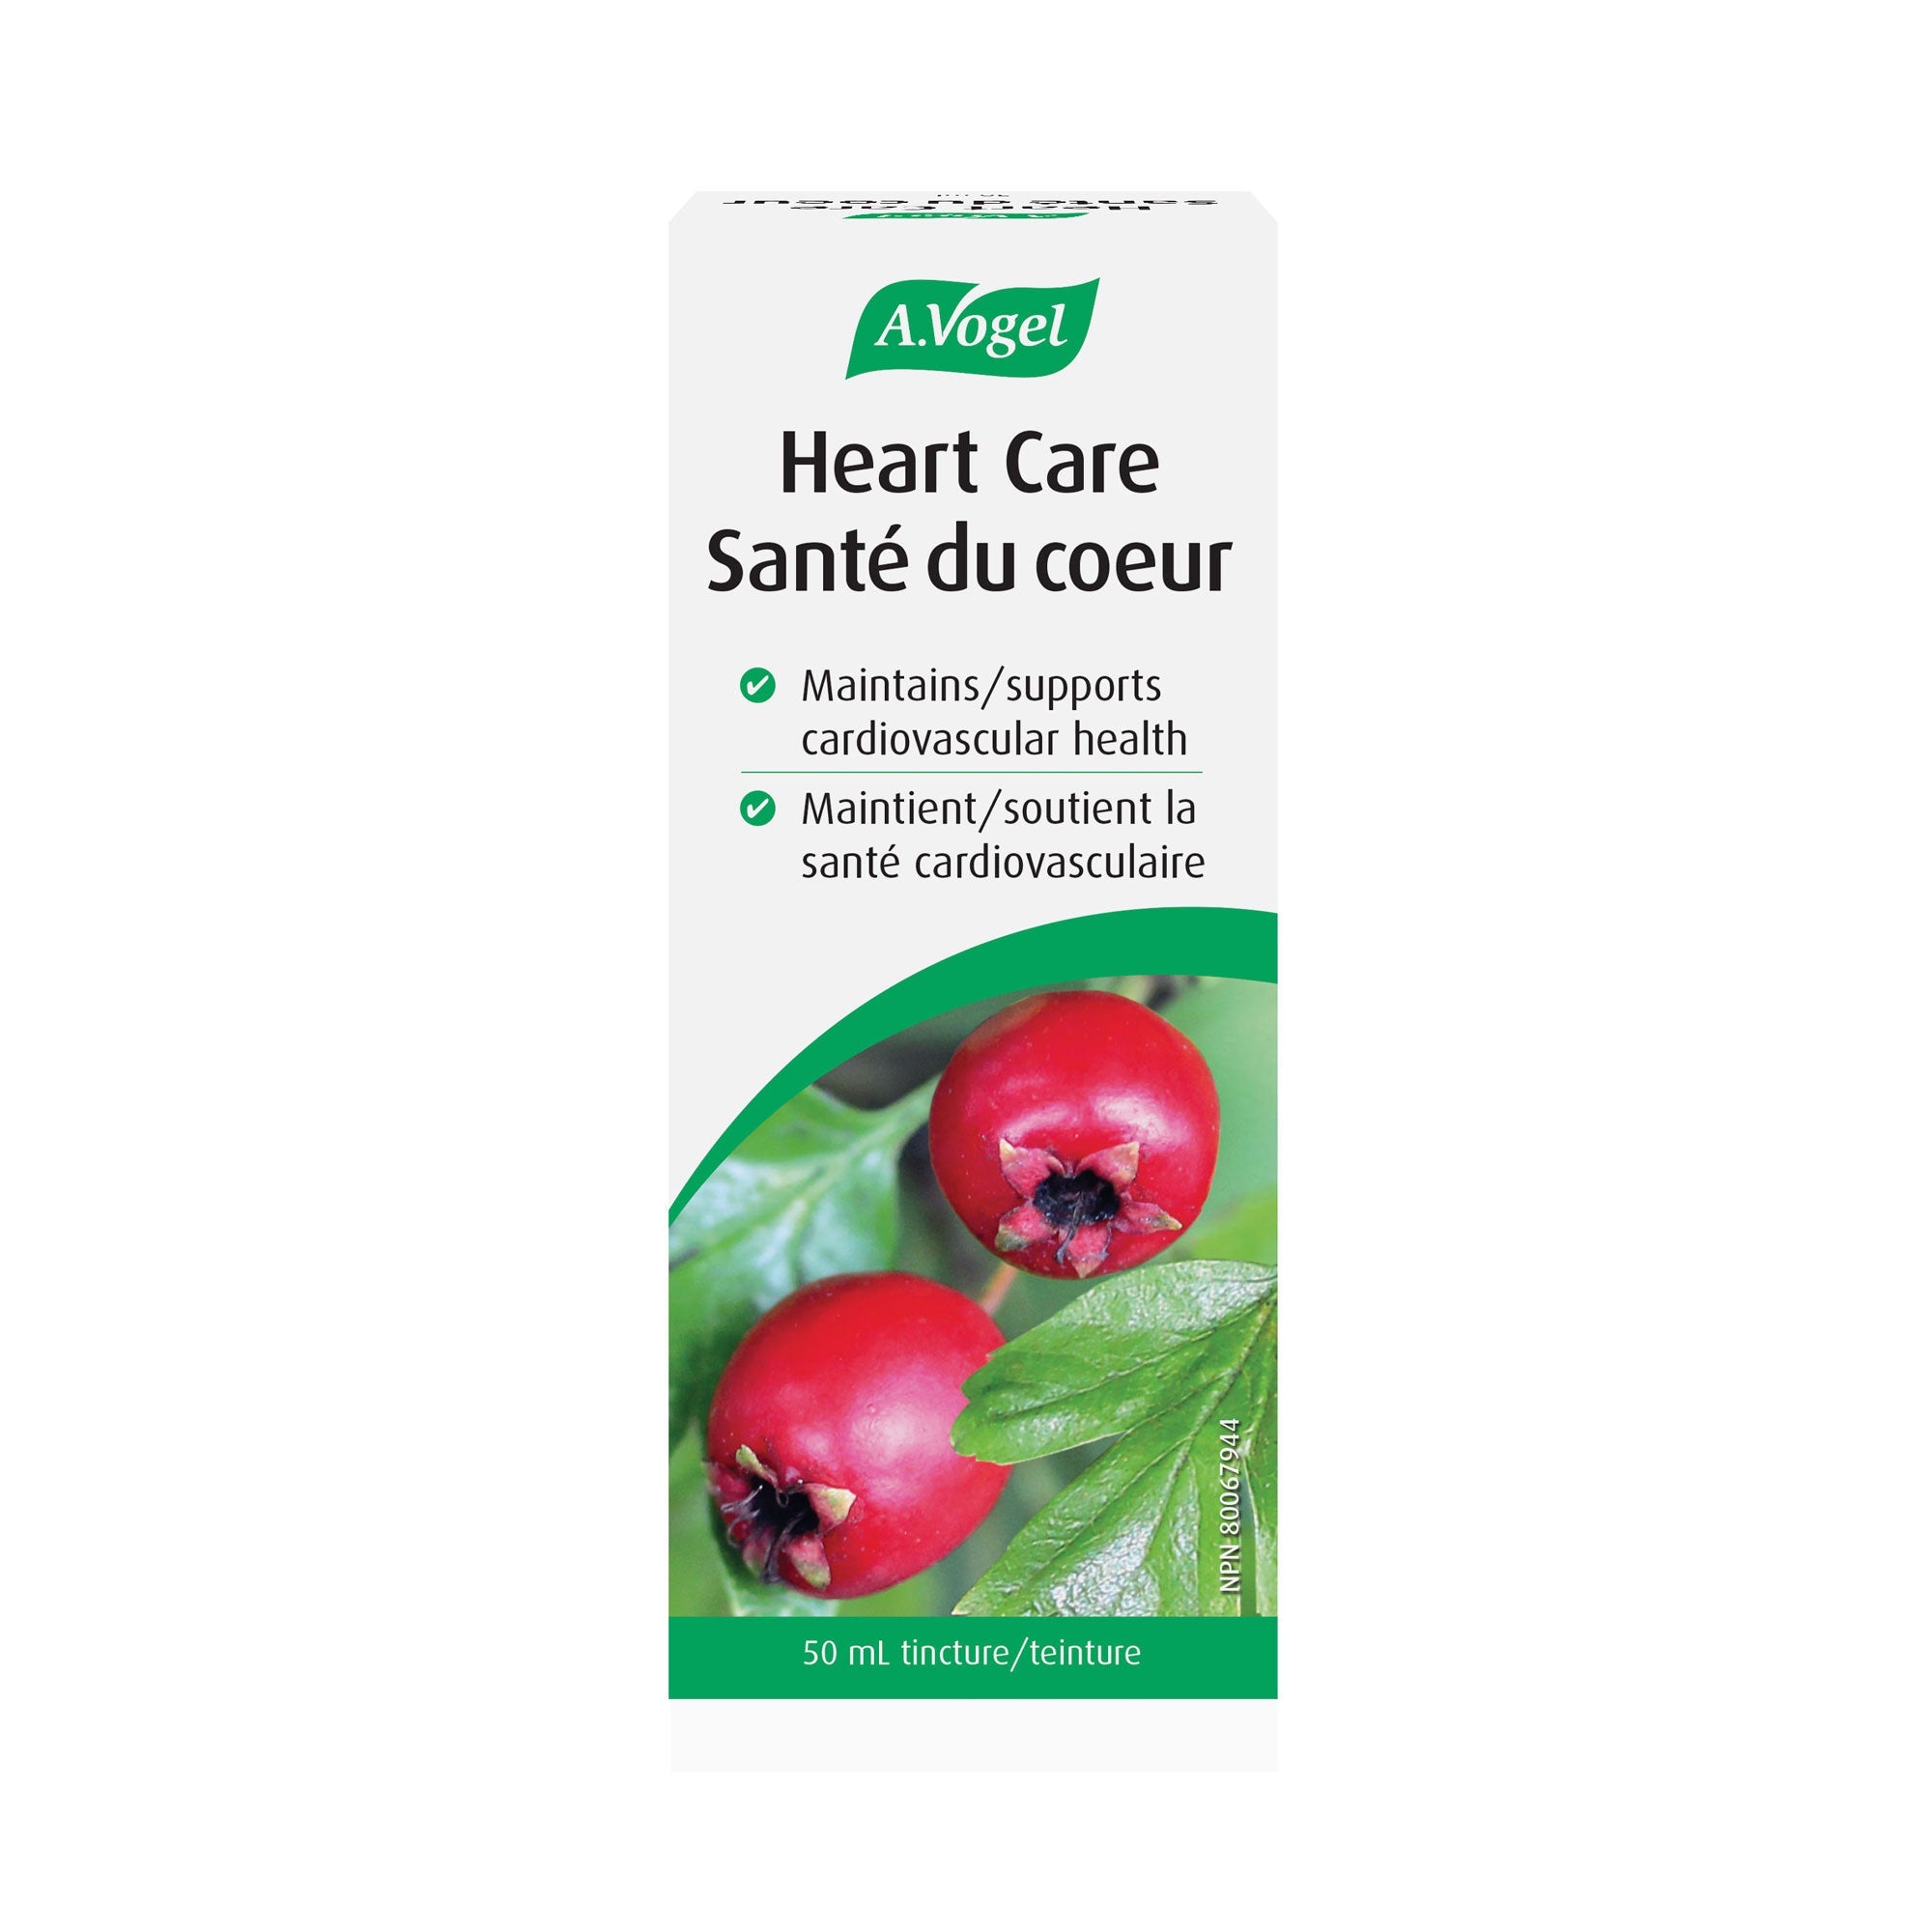 A.Vogel Heart Care Fresh Hawthorn Berry Tincture - Cardiovascular Health 50mL - A.Vogel Canada